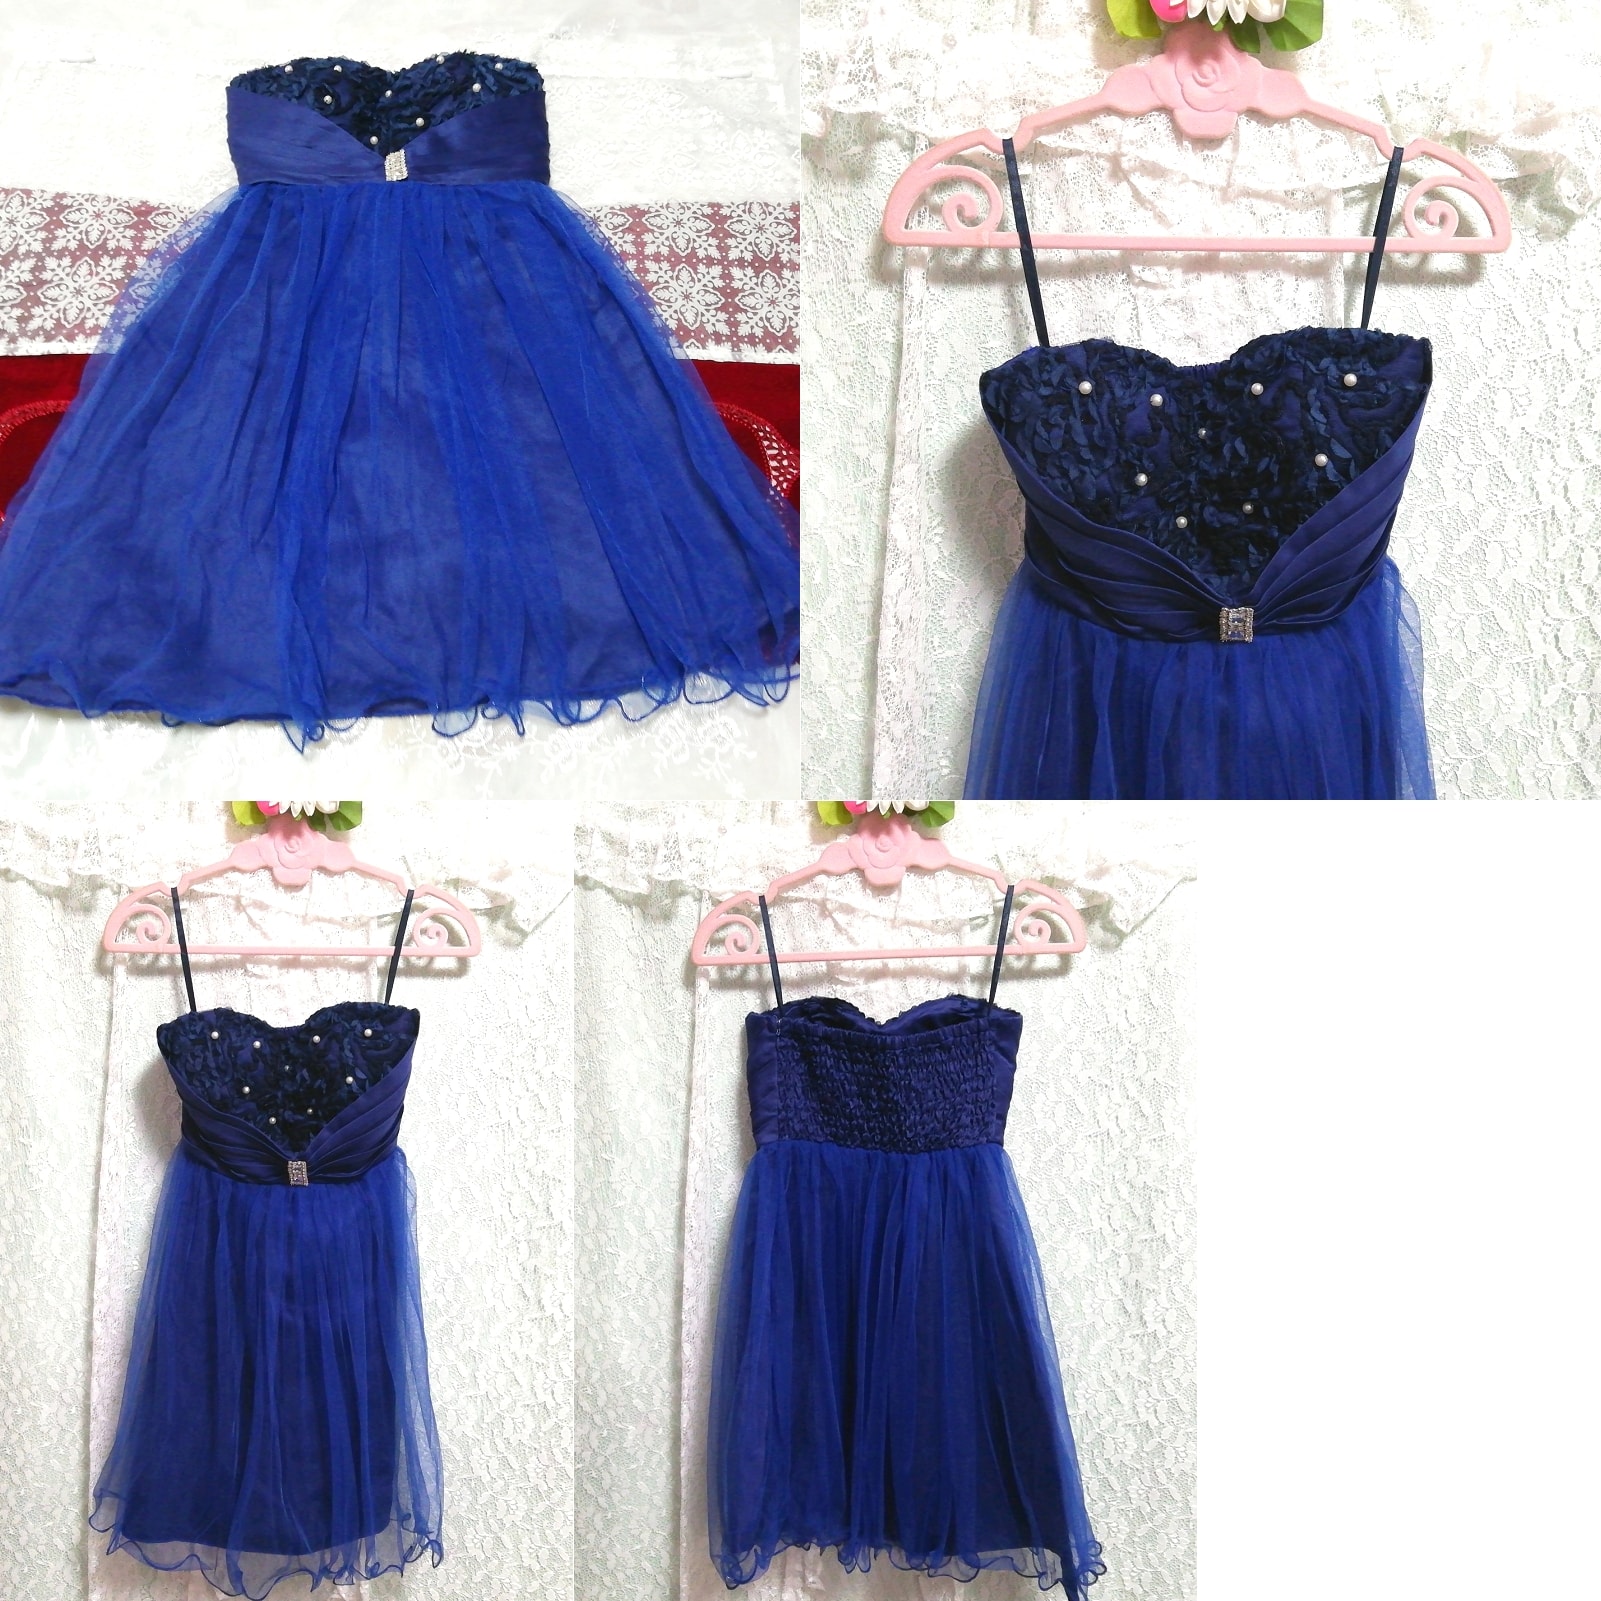 Blue lace tulle skirt negligee nightgown nightwear sleeveless dress, fashion, ladies' fashion, nightwear, pajamas